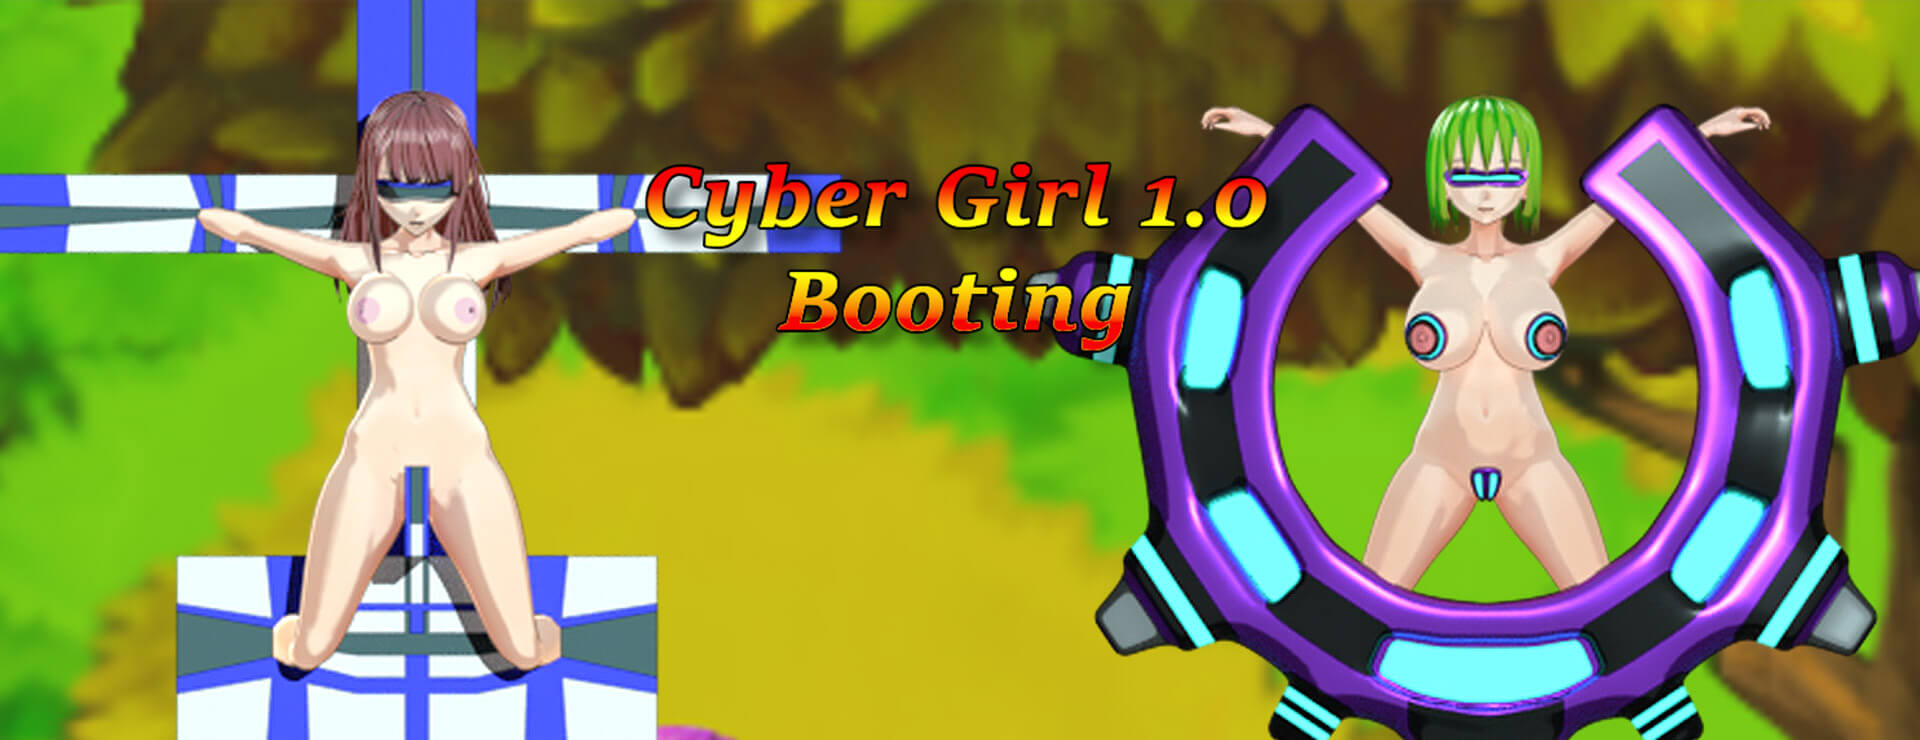 Cyber Girl 1.0: Booting - Action Adventure Spiel